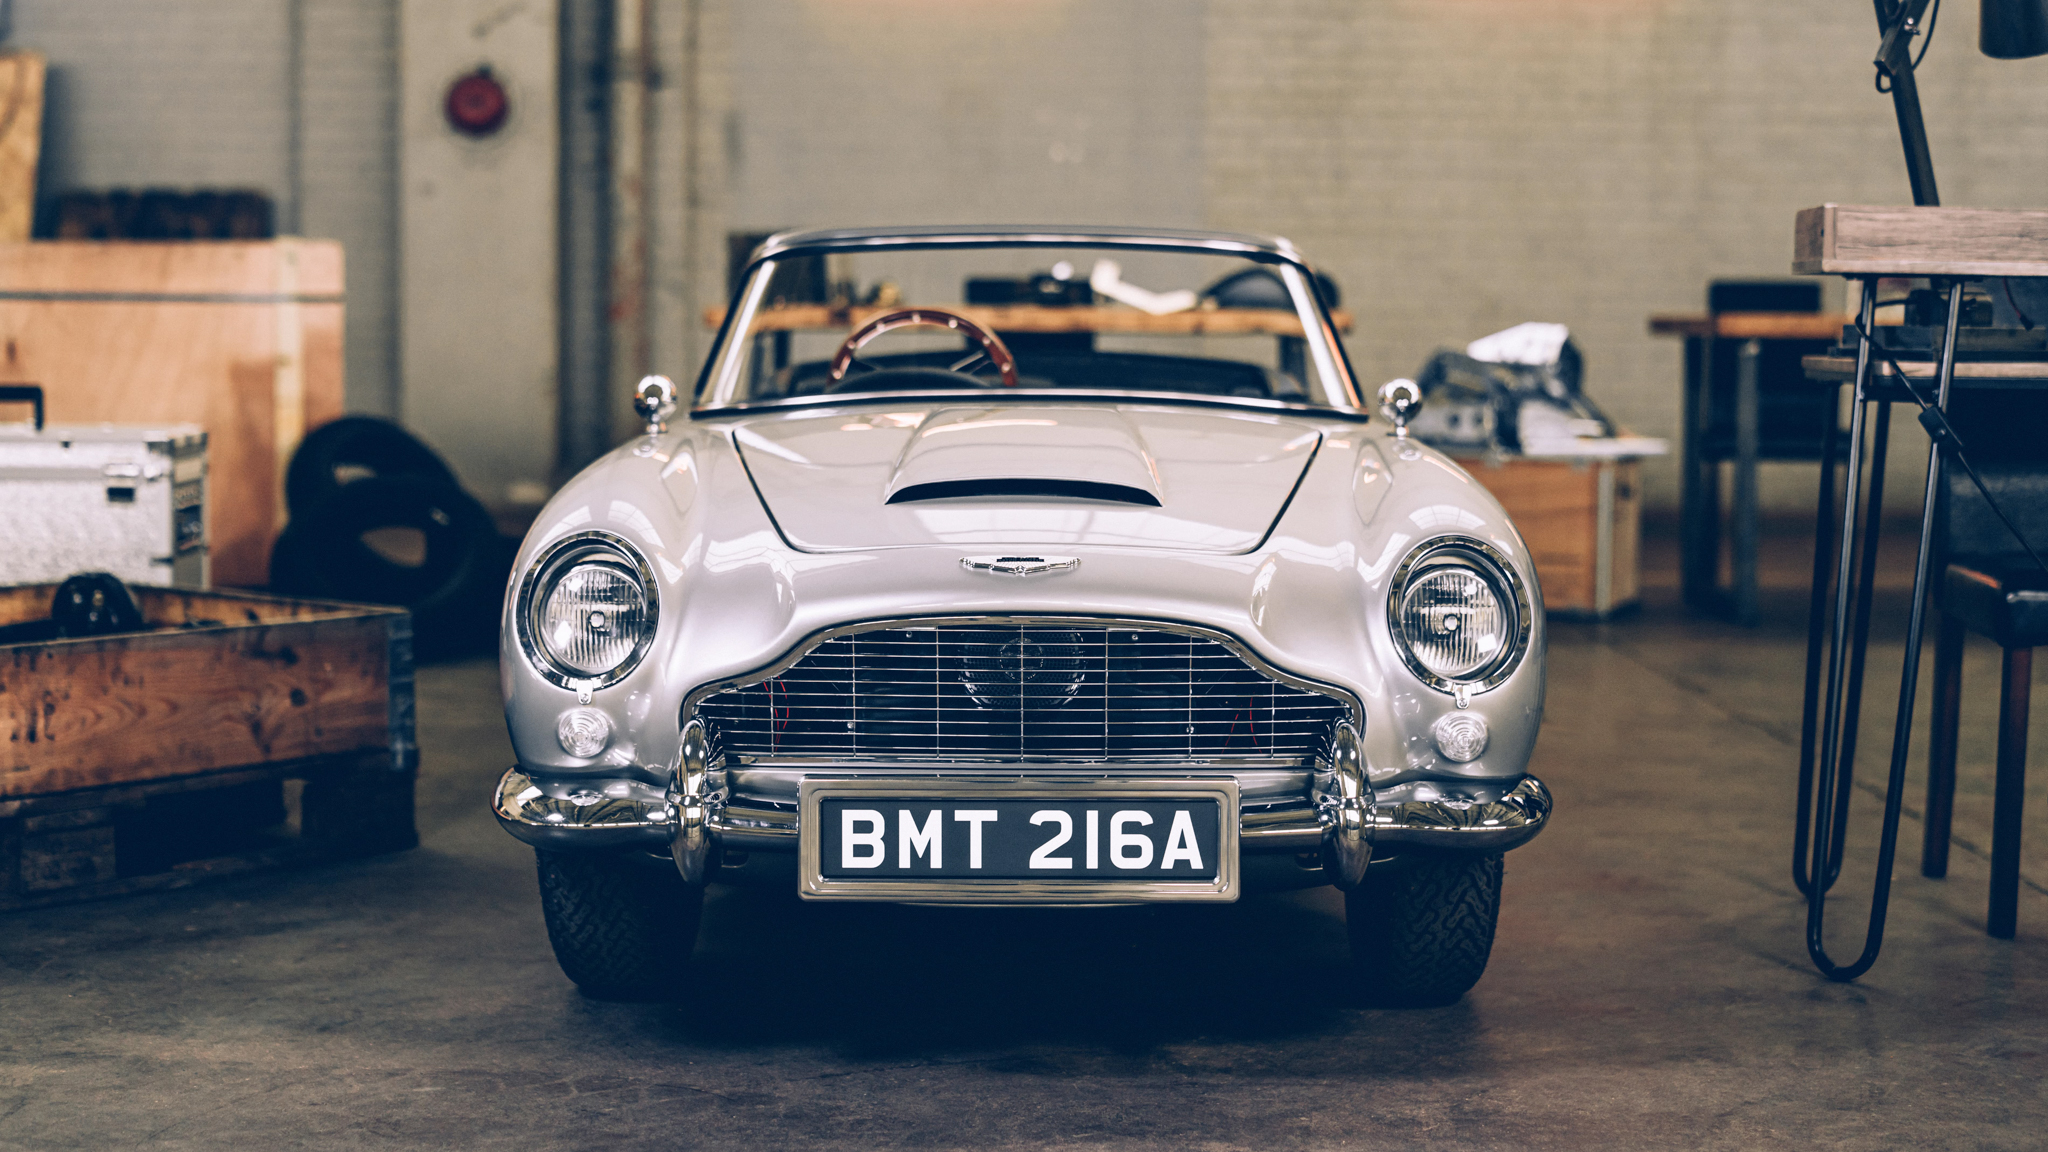 Khám phá Aston Martin DB5 phiên bản No Time To Die của James Bond - 7